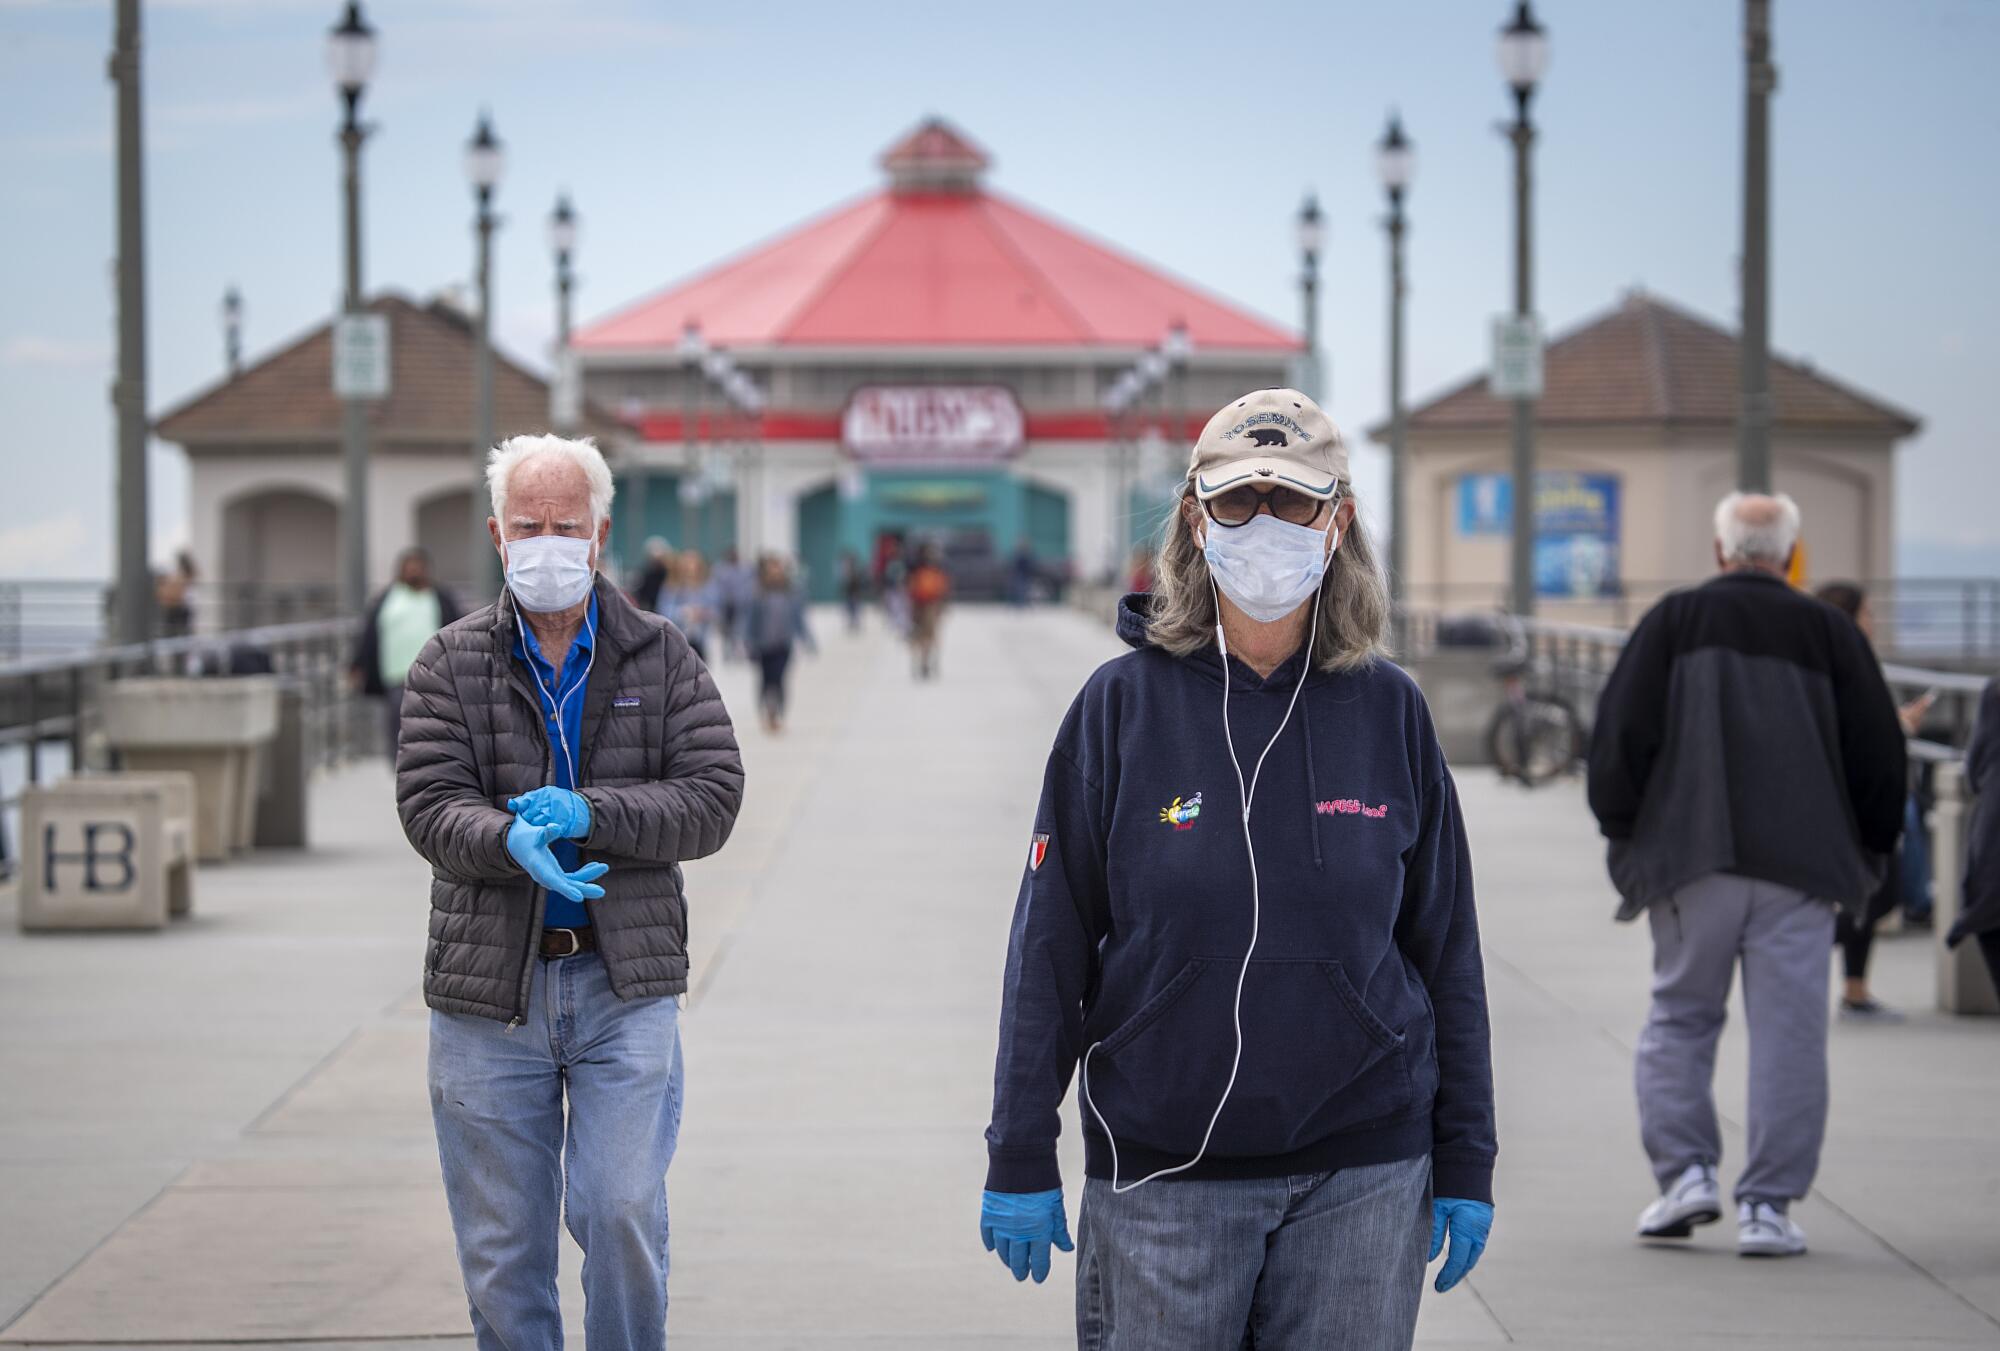 Dallas Weaver, 79, and his wife, Janet Weaver, 75, of Huntington Beach, return from a walk on the Huntington Beach pier amid the coronavirus pandemic.